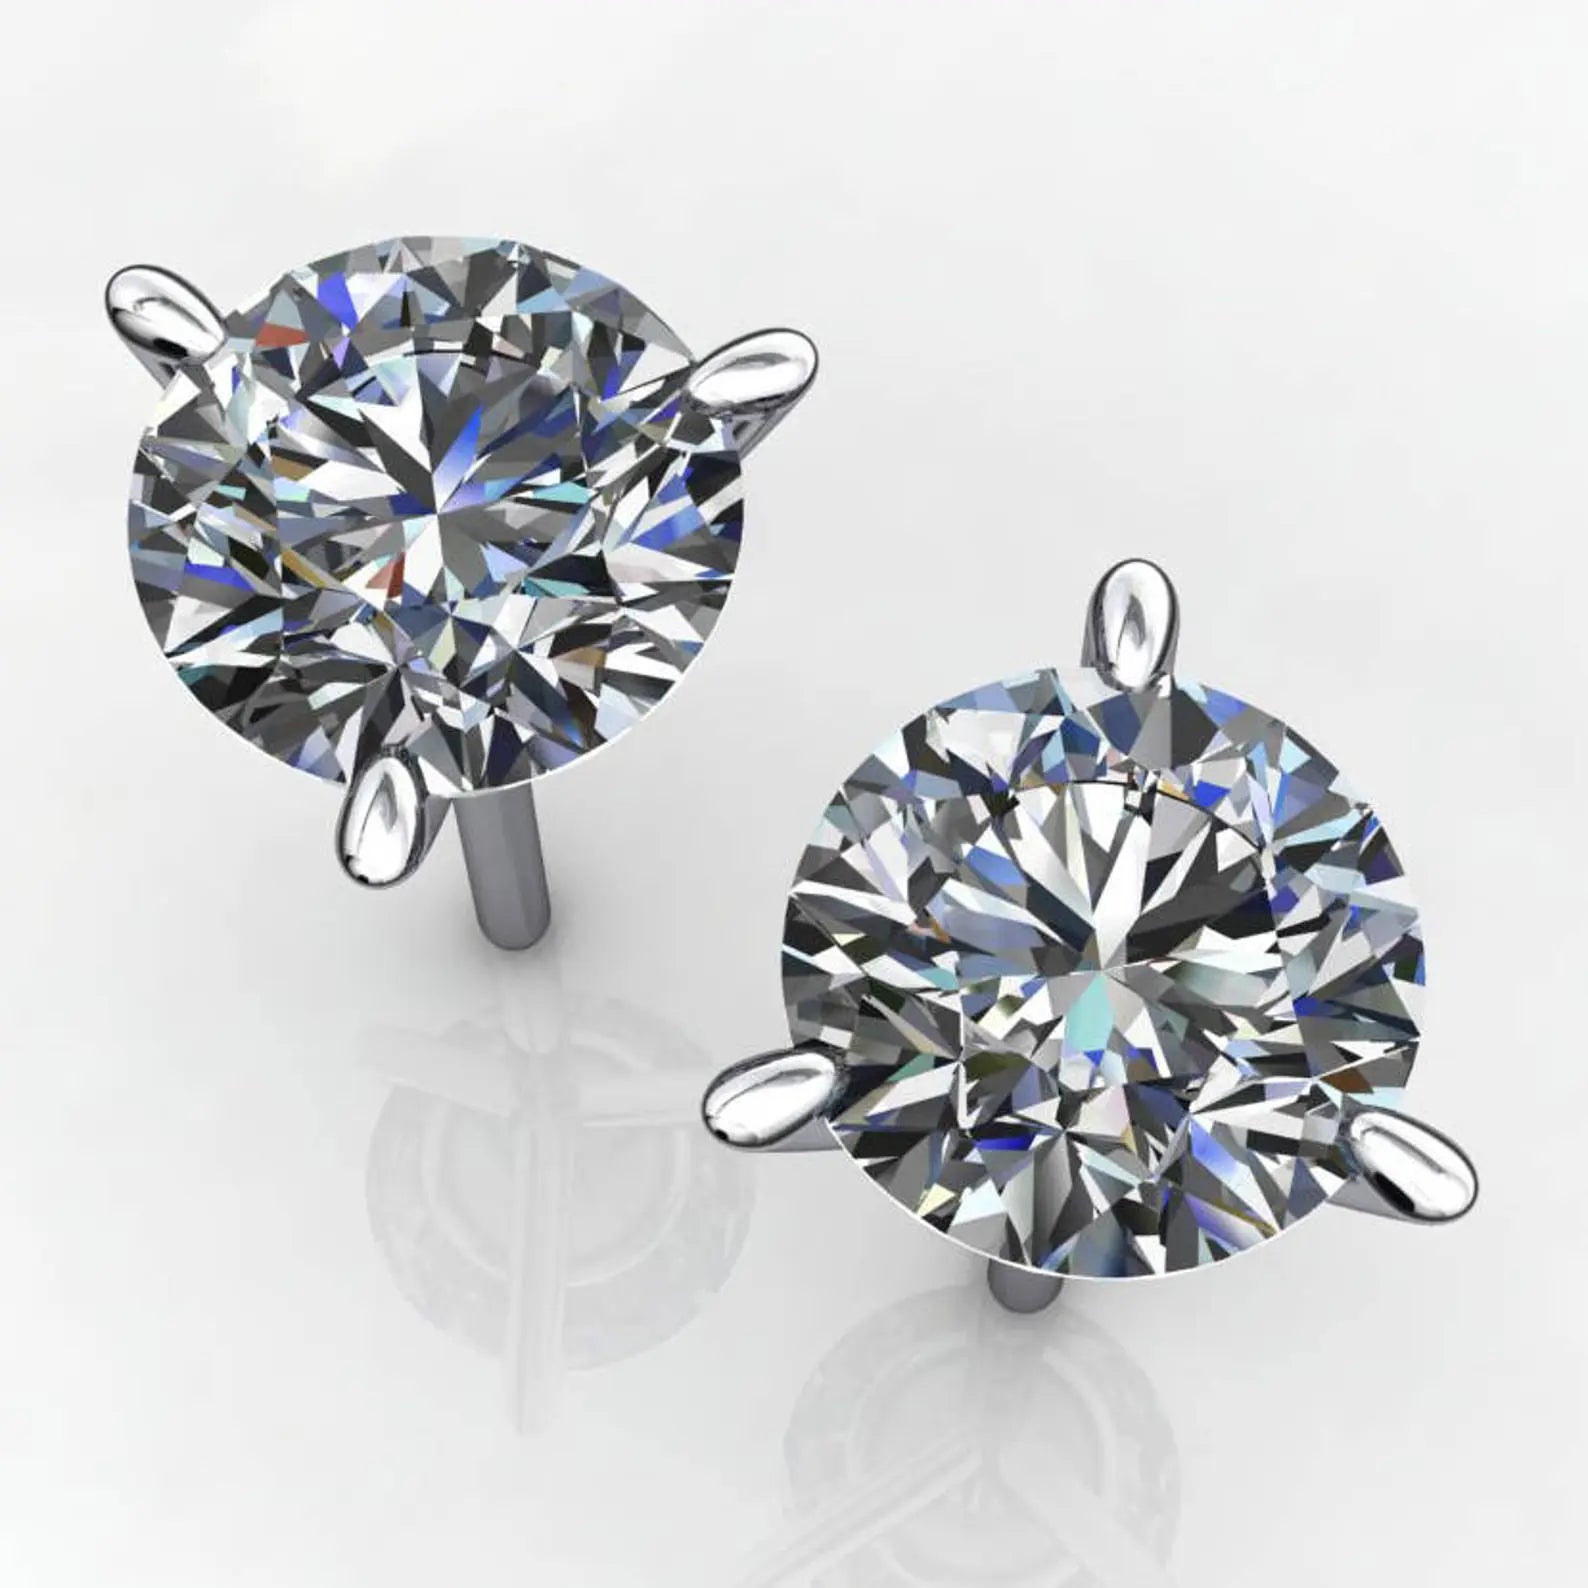 2 carat diamond cut NEO moissanite earrings, 14k gold stud earrings - J Hollywood Designs